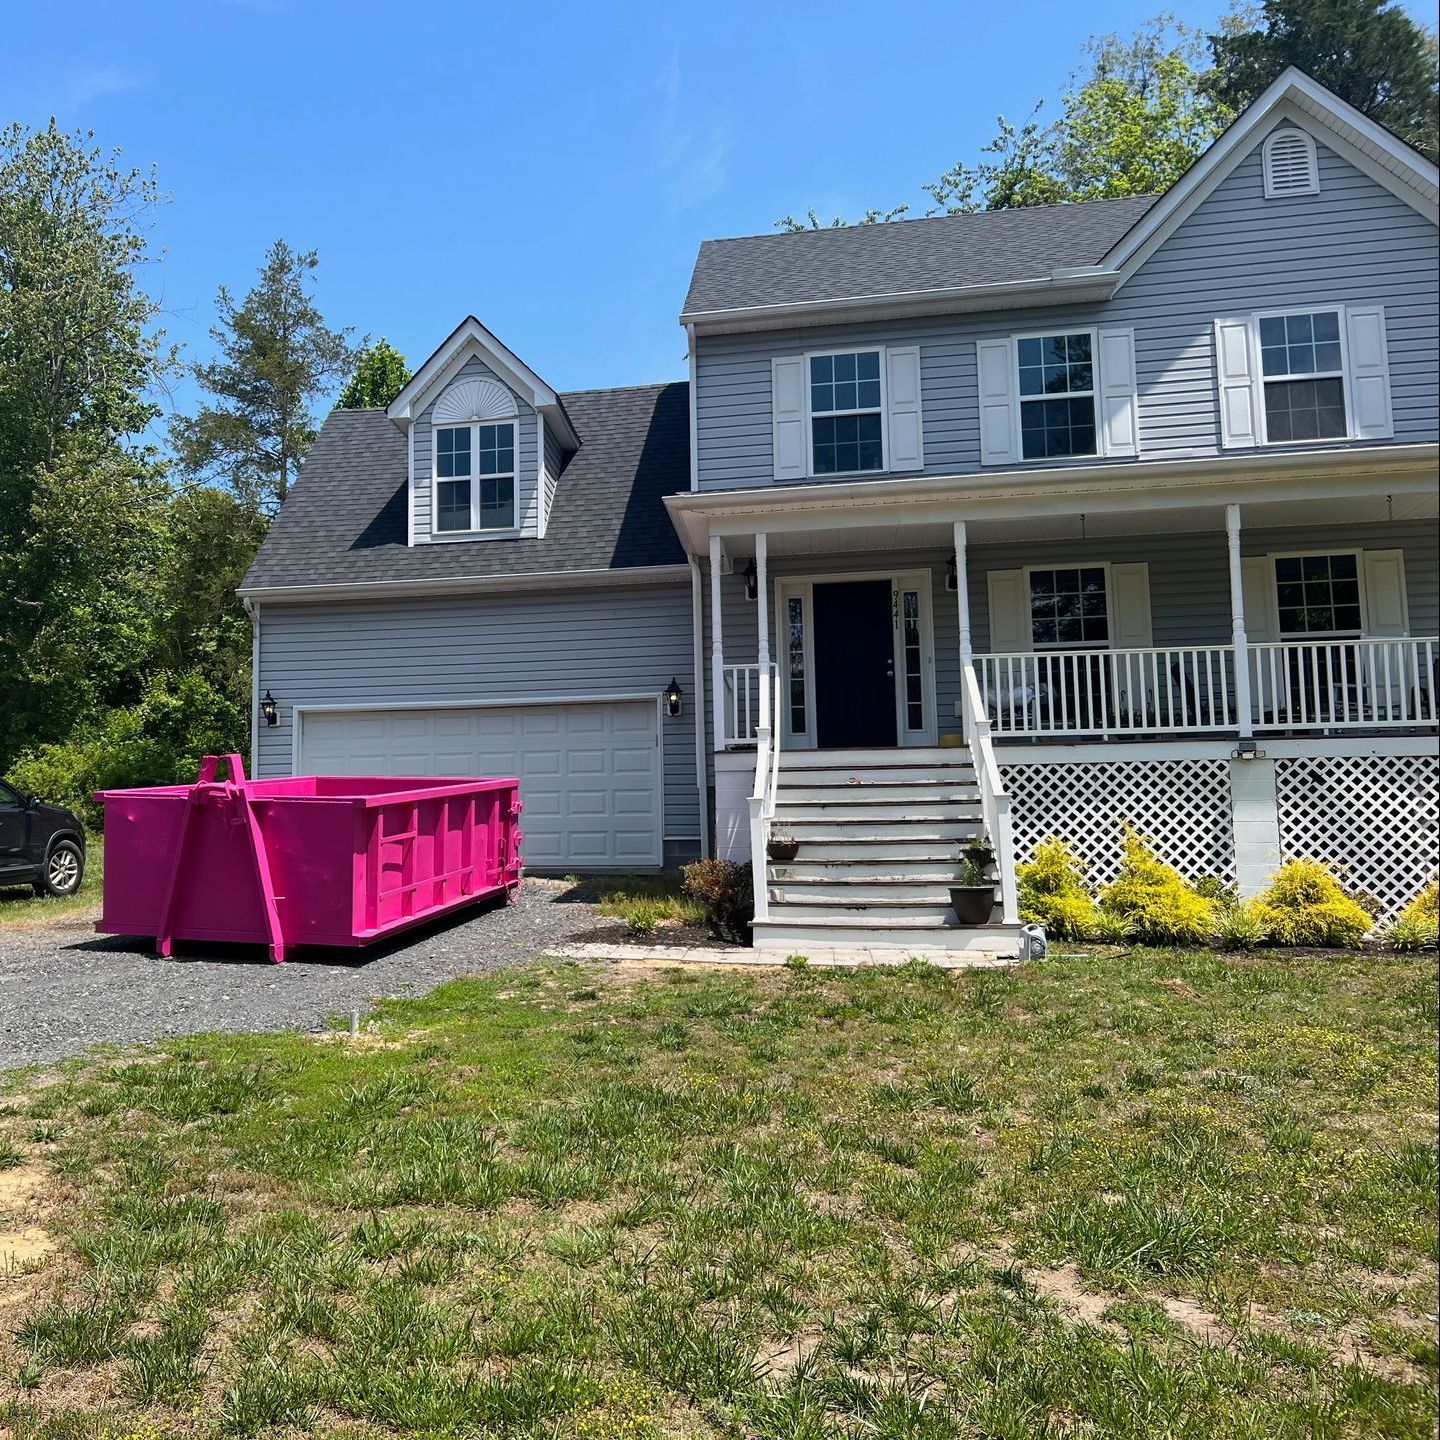 Pink Dumpster Rental in Culpeper VA